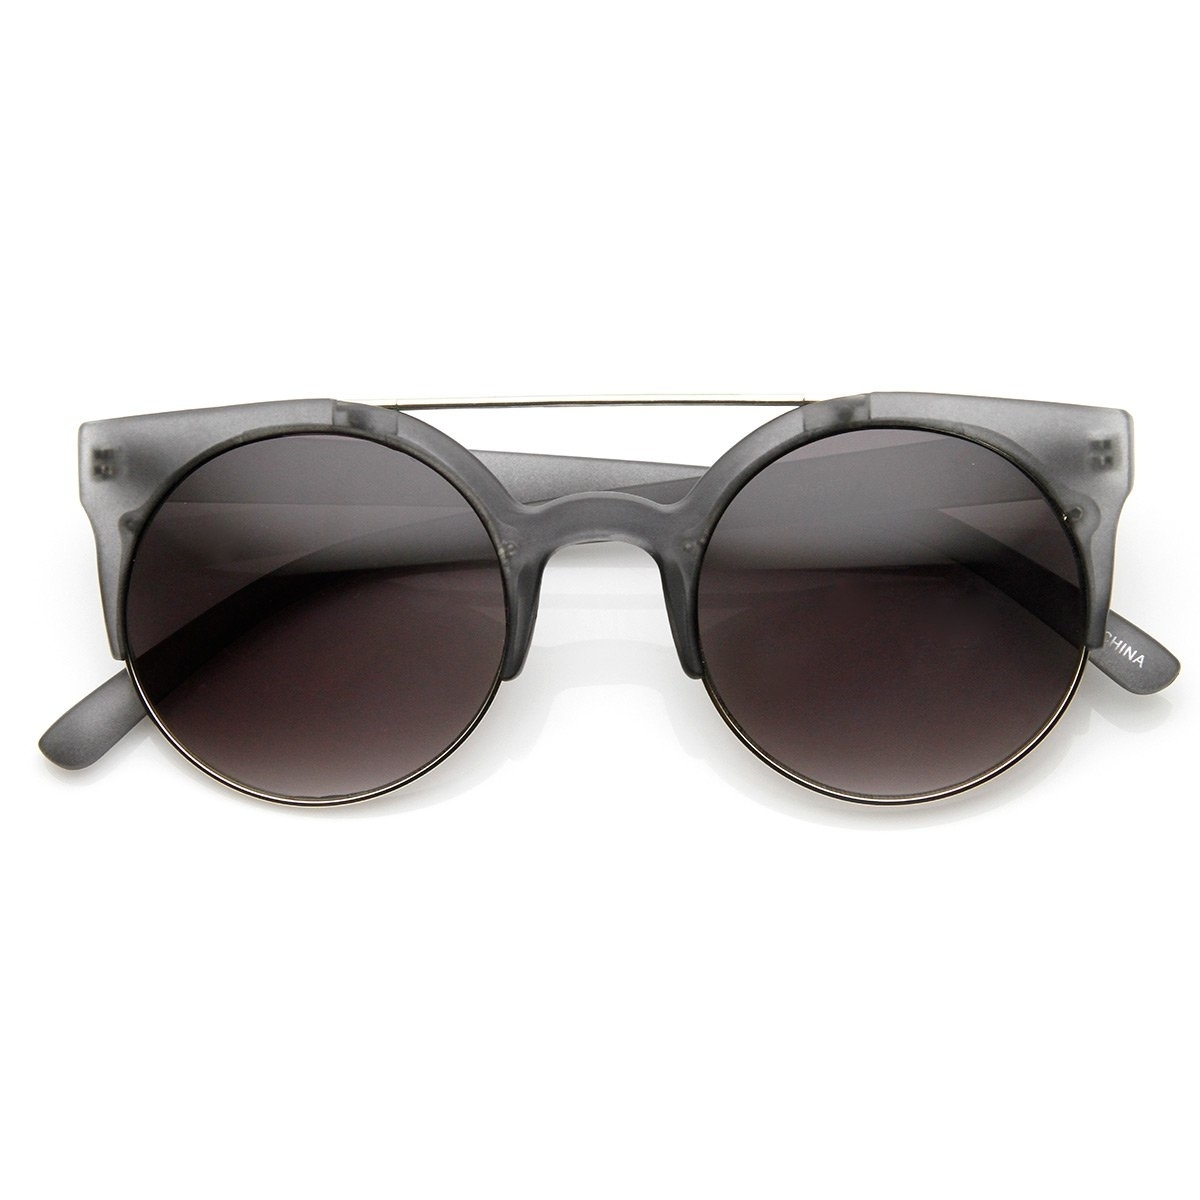 Retro Circle Round Half Frame Aviator Bar Sunglasses - Creme